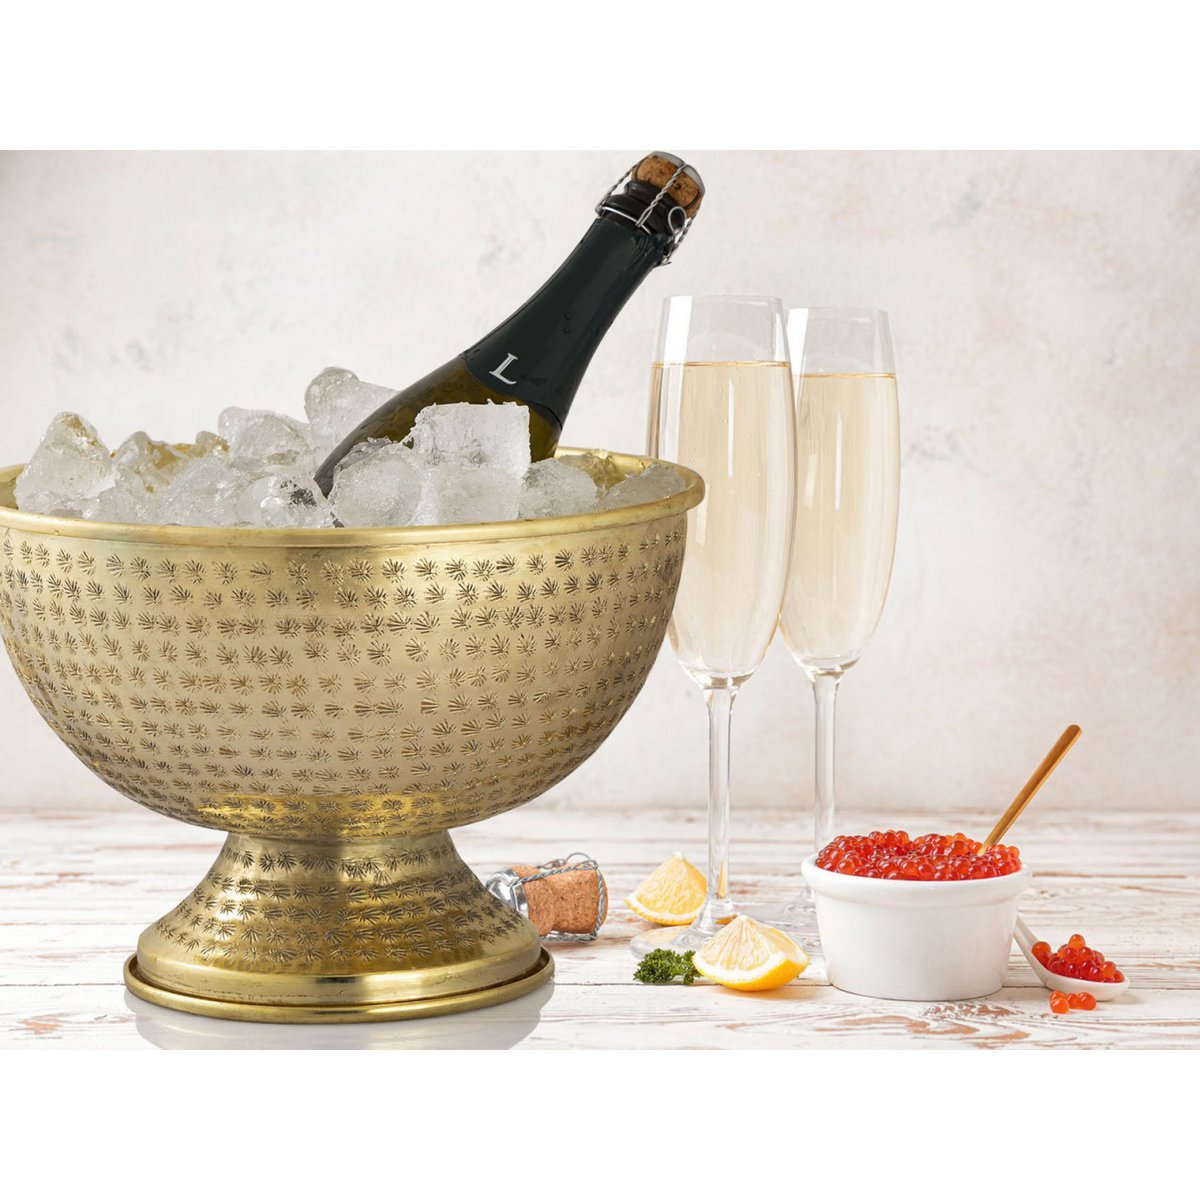 Weinkühler Flaschenkühler Metall ø 29 cm Sektkühler rund silber gold Eiskühler Champagnerkühler variant: gold